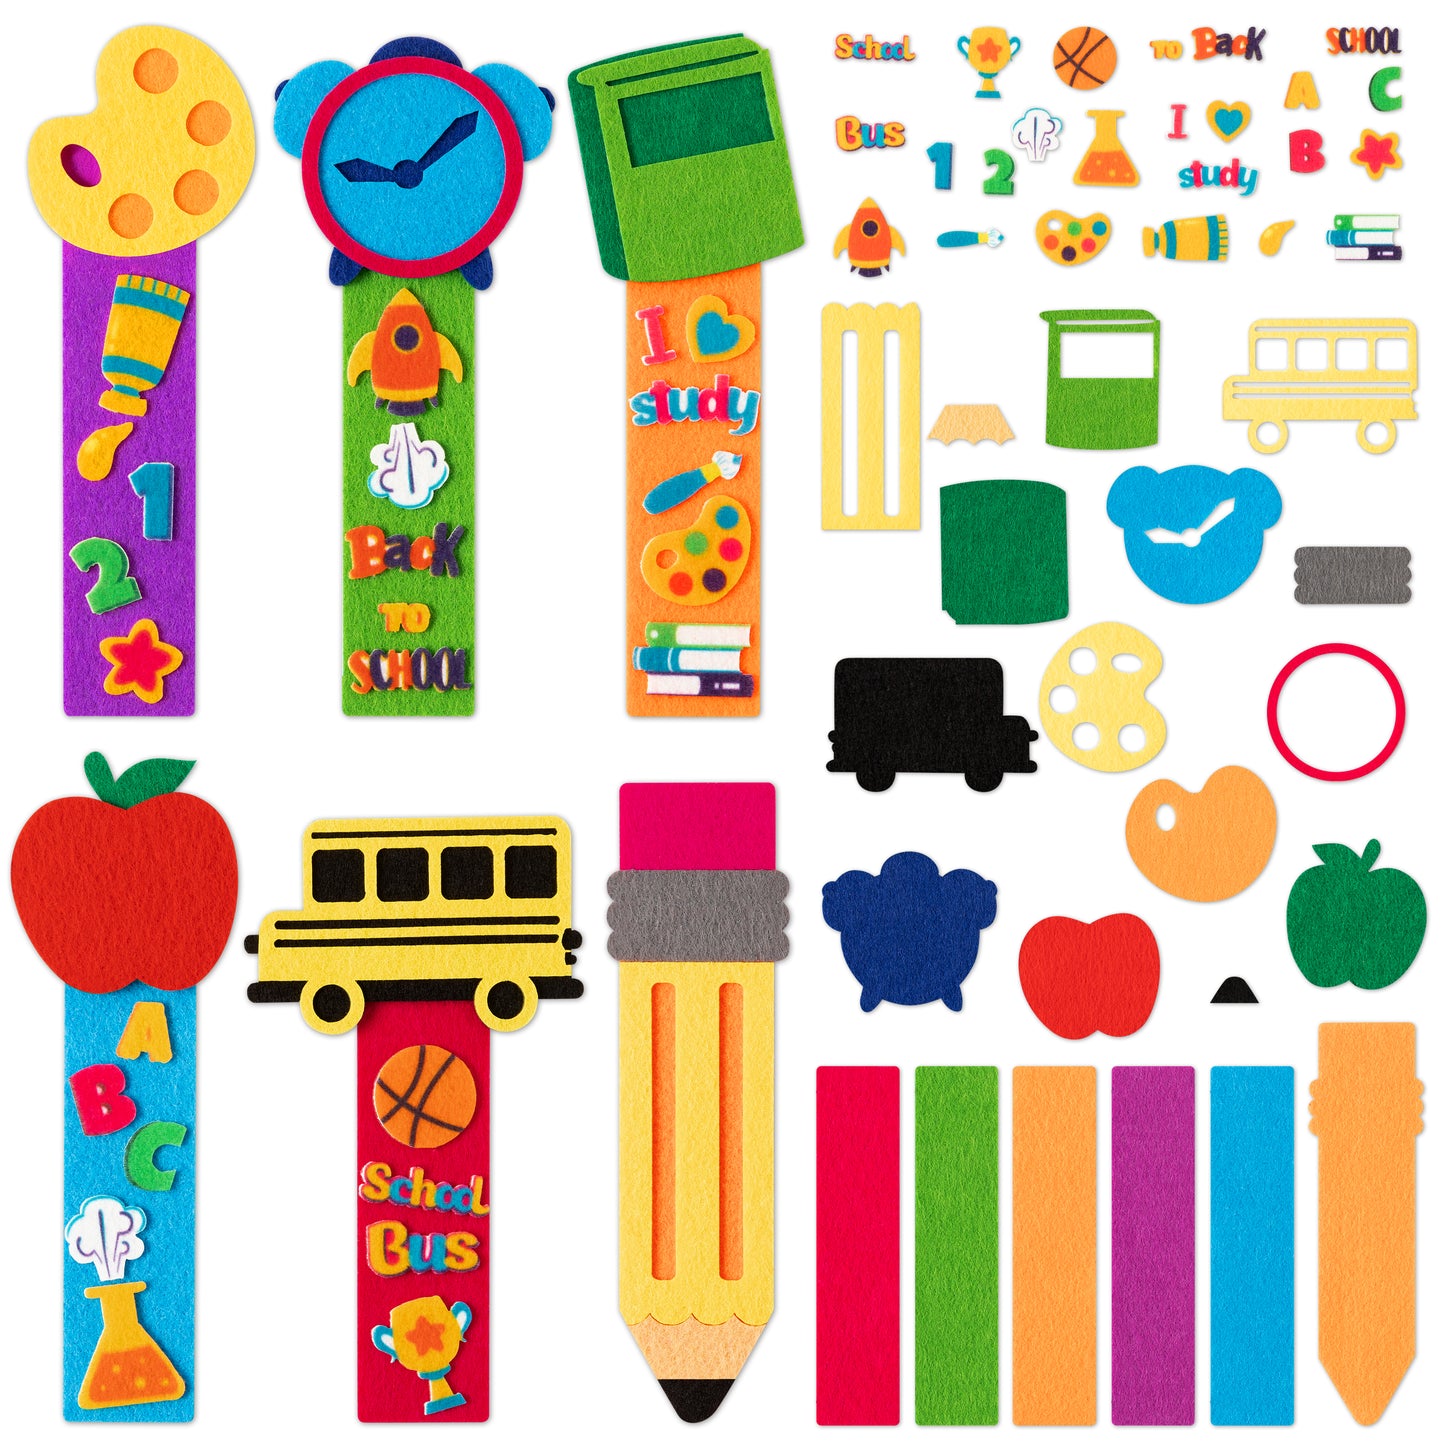 HubirdSall 24 Pack Back to School Felt Bookmarks Craft Kit, Make Your